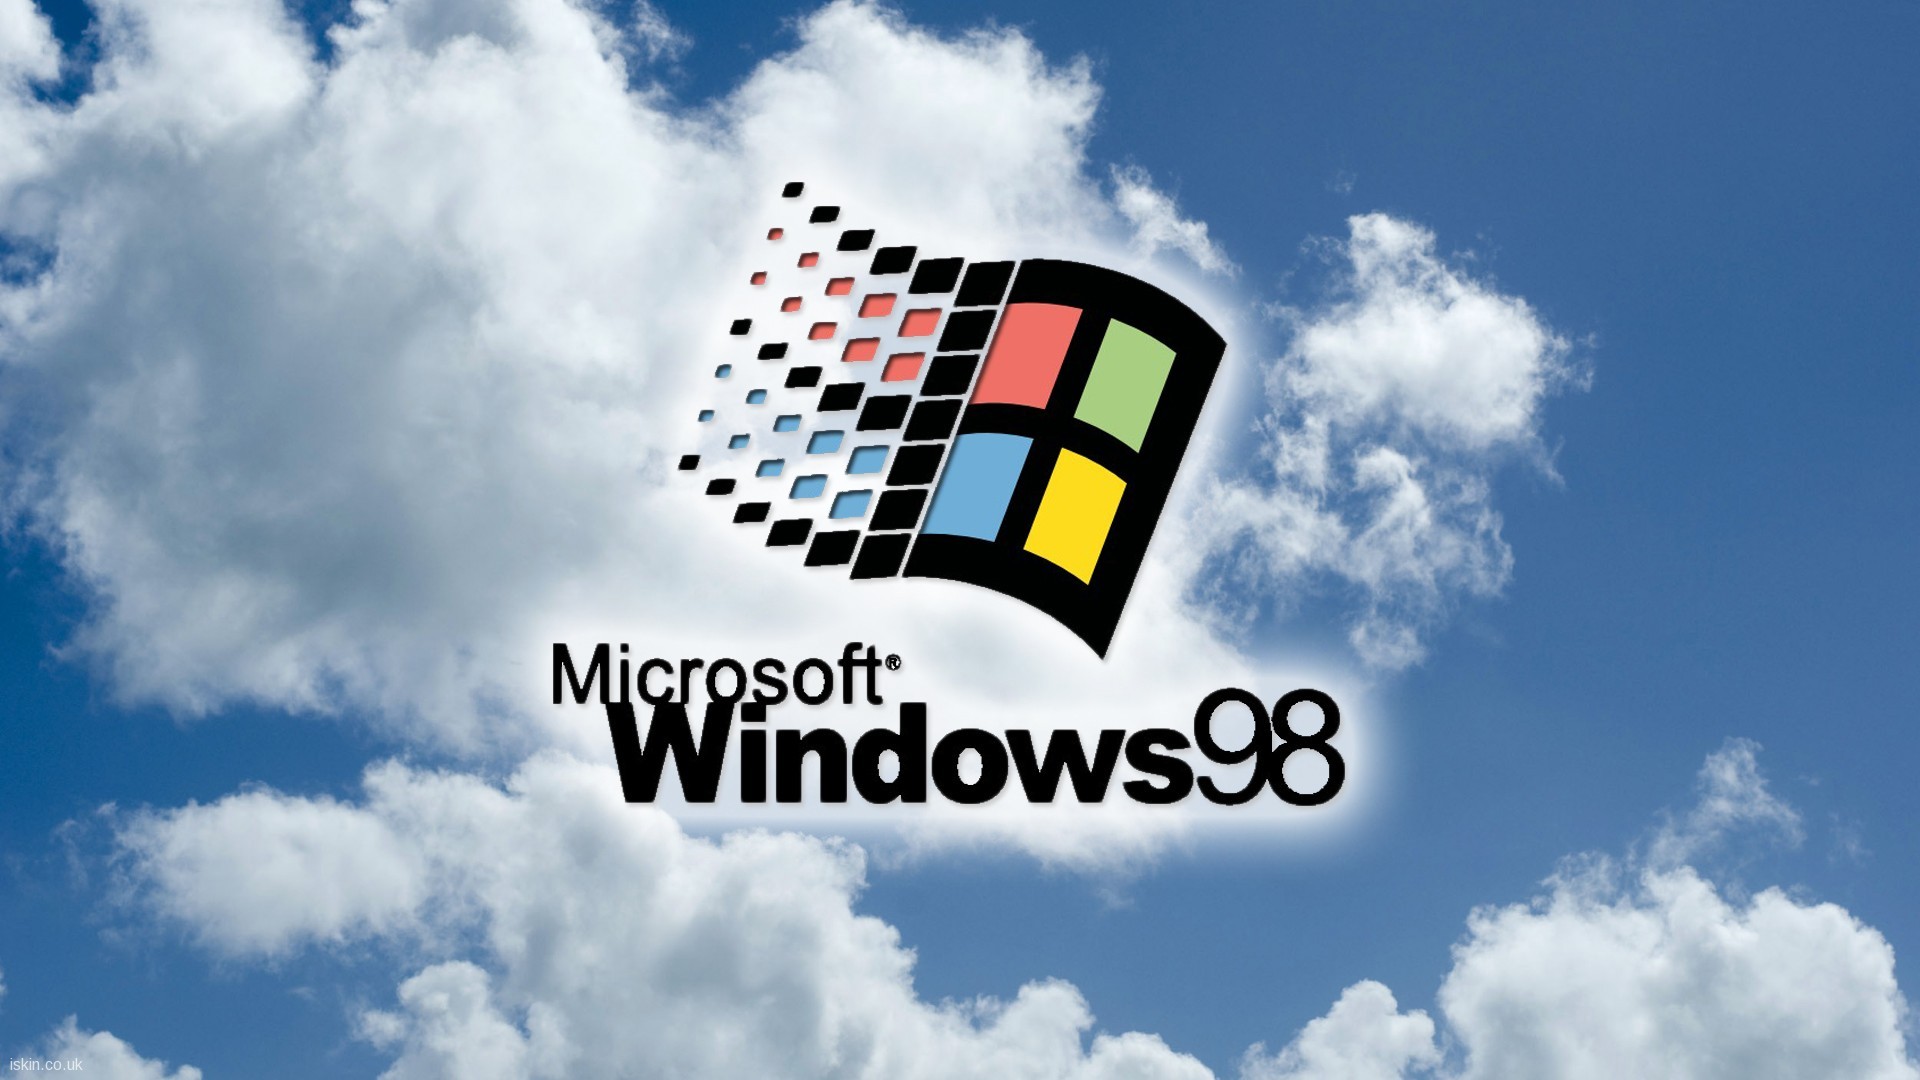 Windows 98, Microsoft Windows, Vintage, 90s, Computer Wallpaper